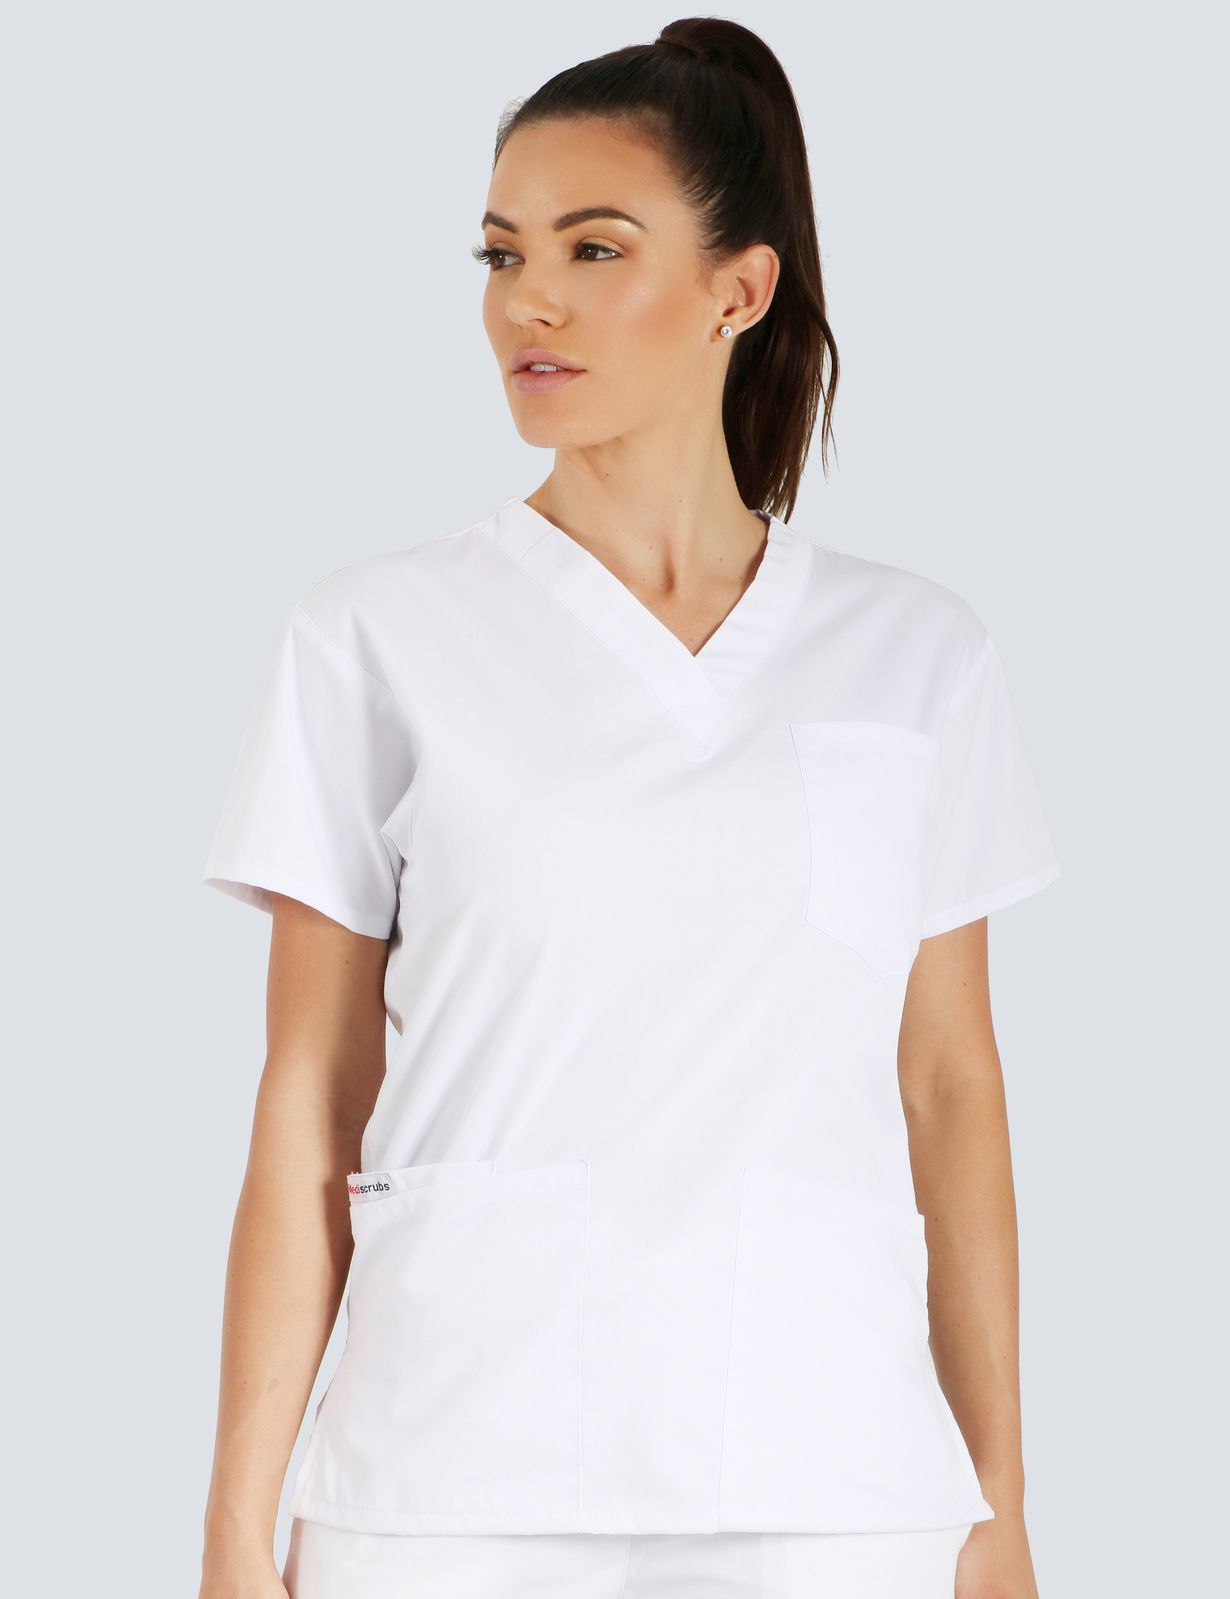 Queensland Children's Hospital Emergency Department Enrolled Nurse Uniform Top Bundle  (4 Pocket Top in White incl Logos)